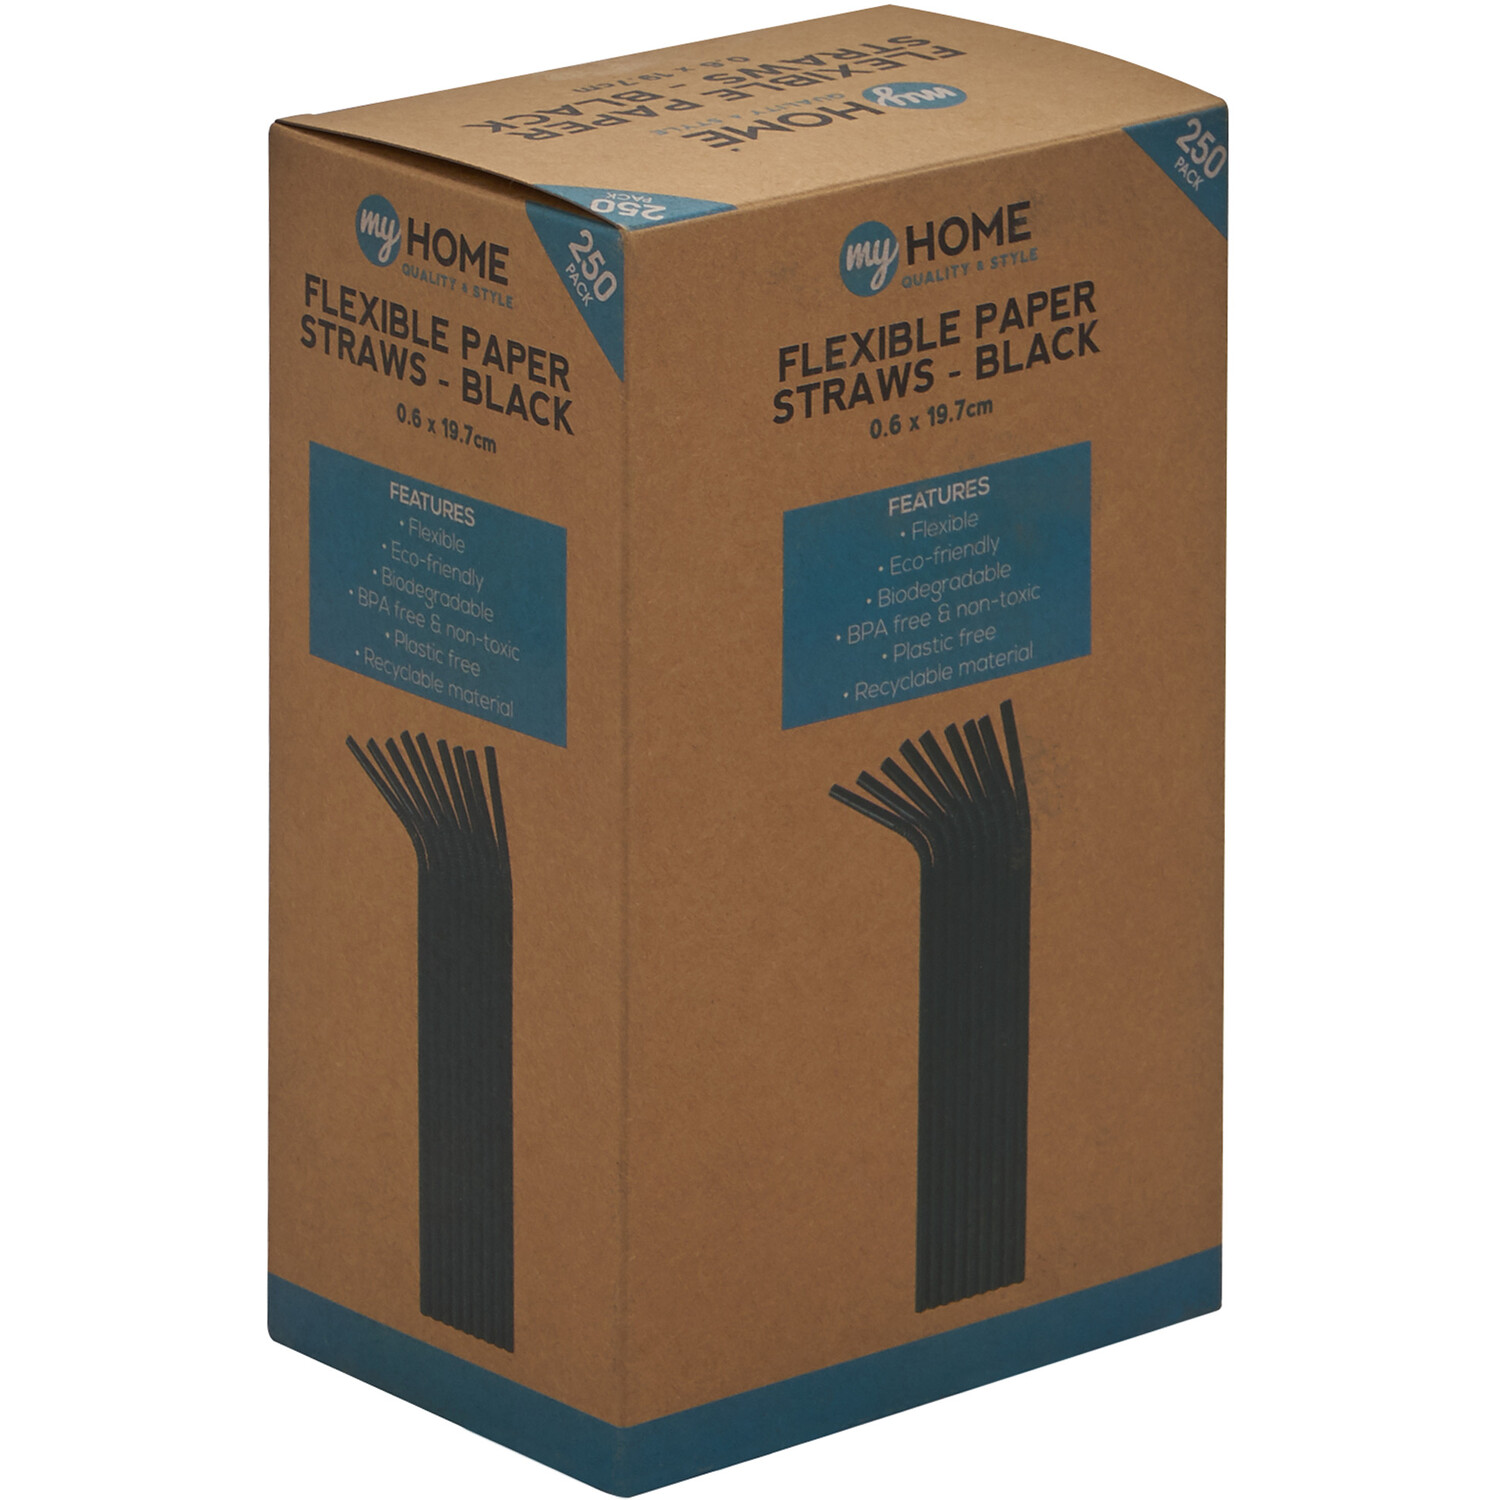 Pack of 250 Flexible Paper Straws - Black Image 1